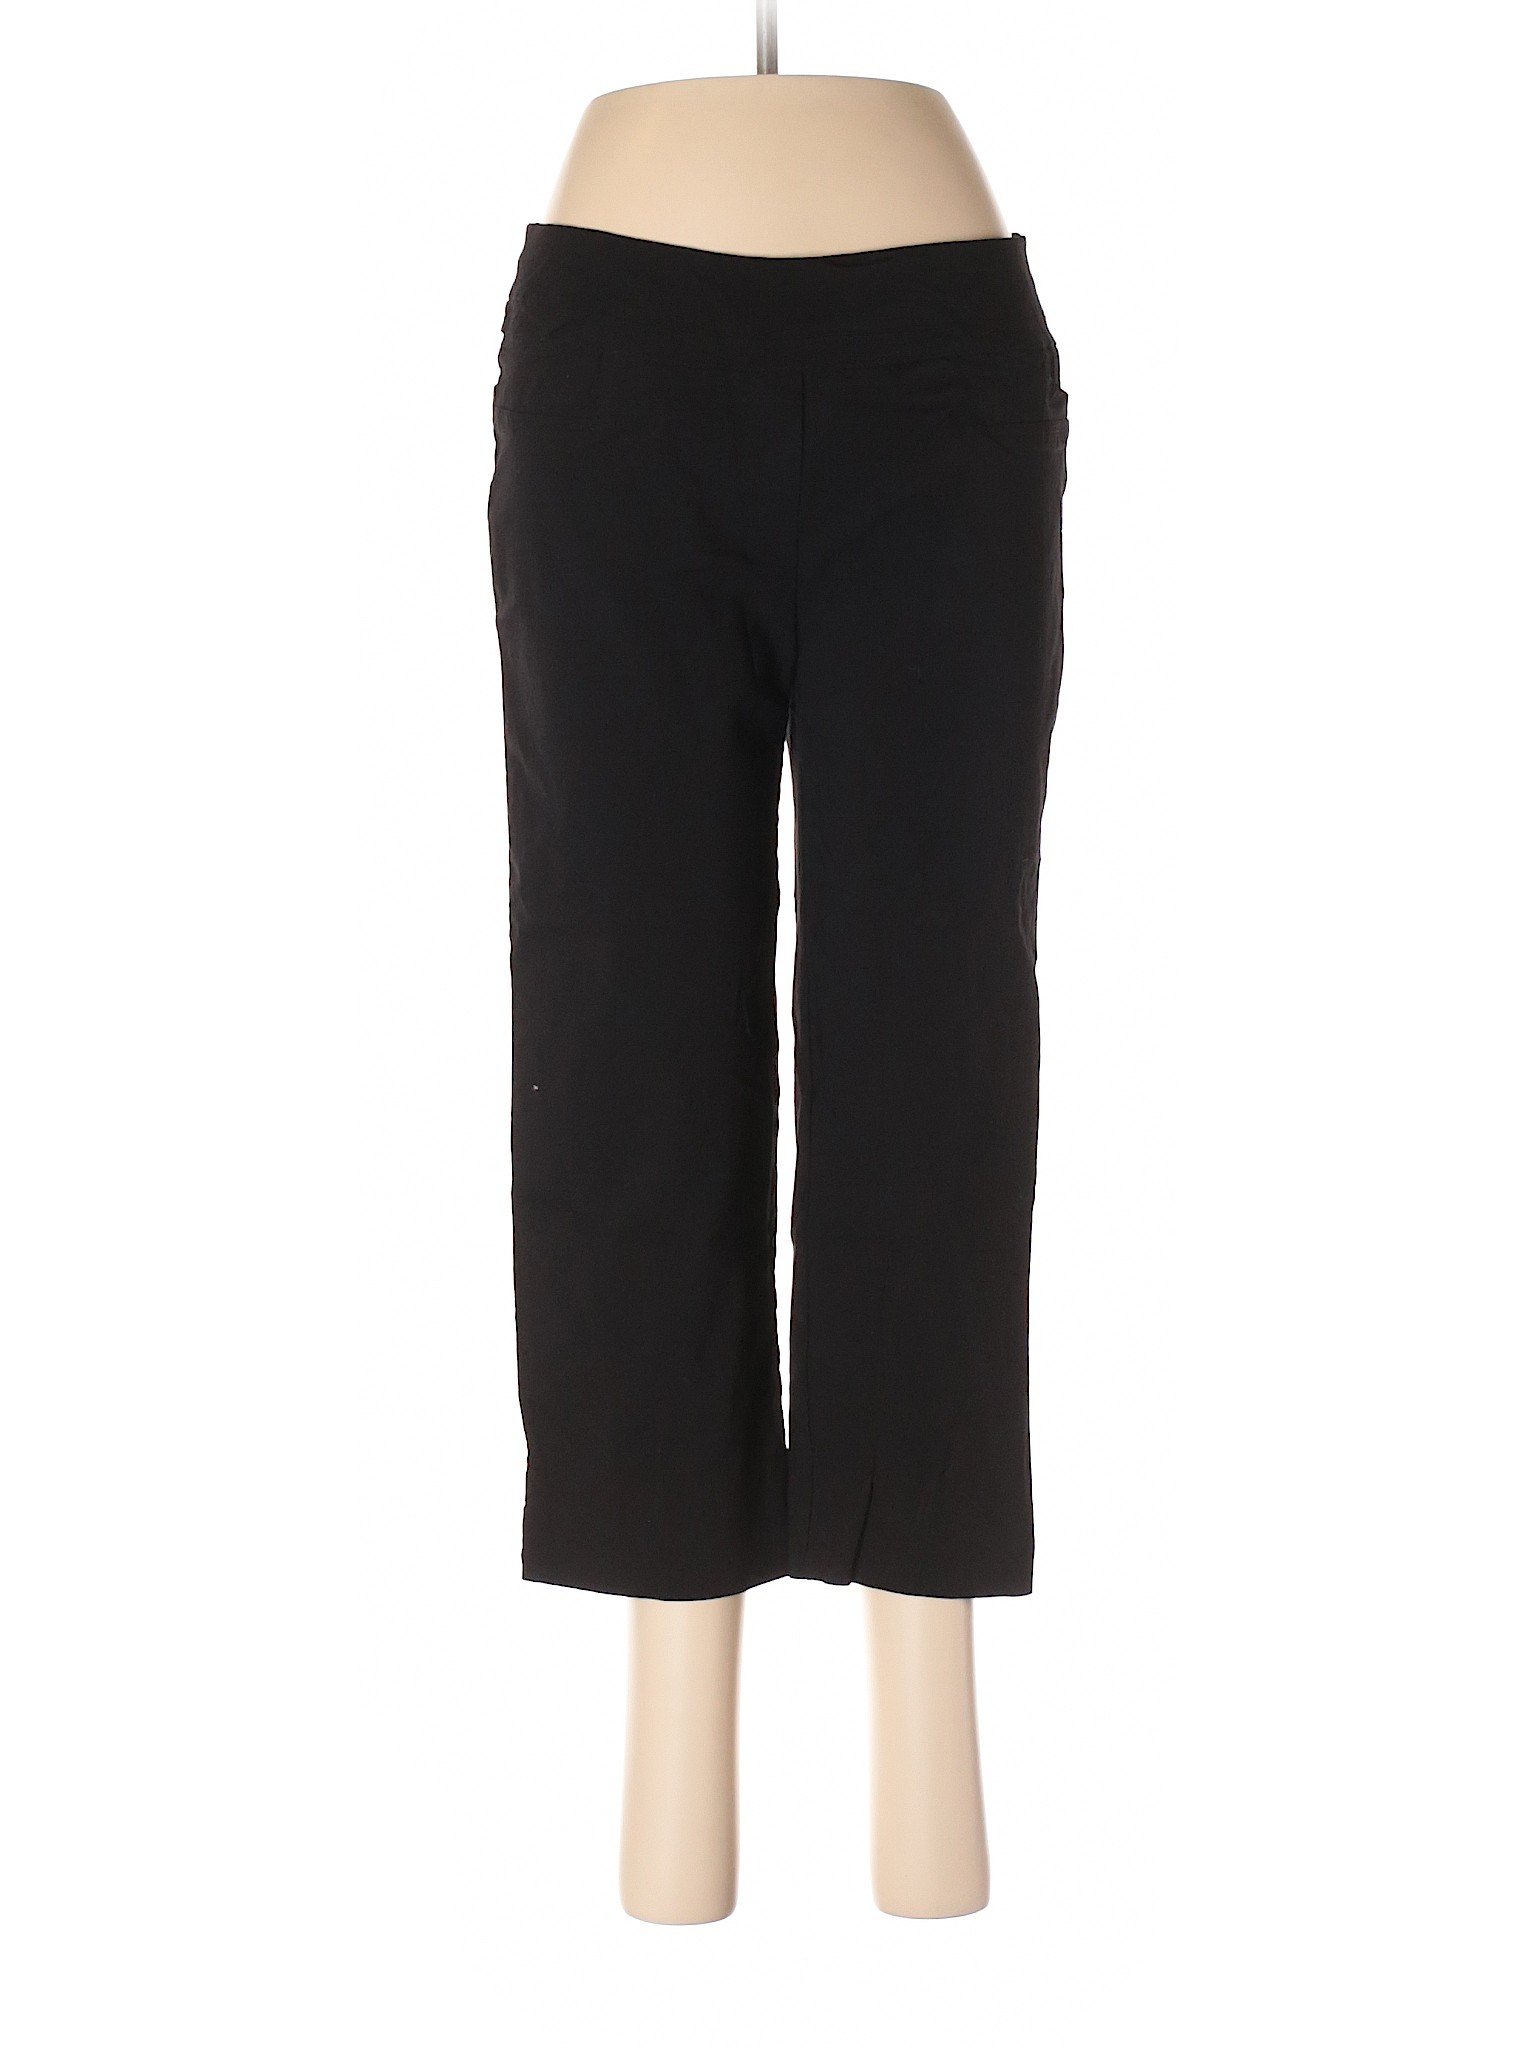 Zac & Rachel Solid Black Casual Pants Size 8 - 91% off | thredUP